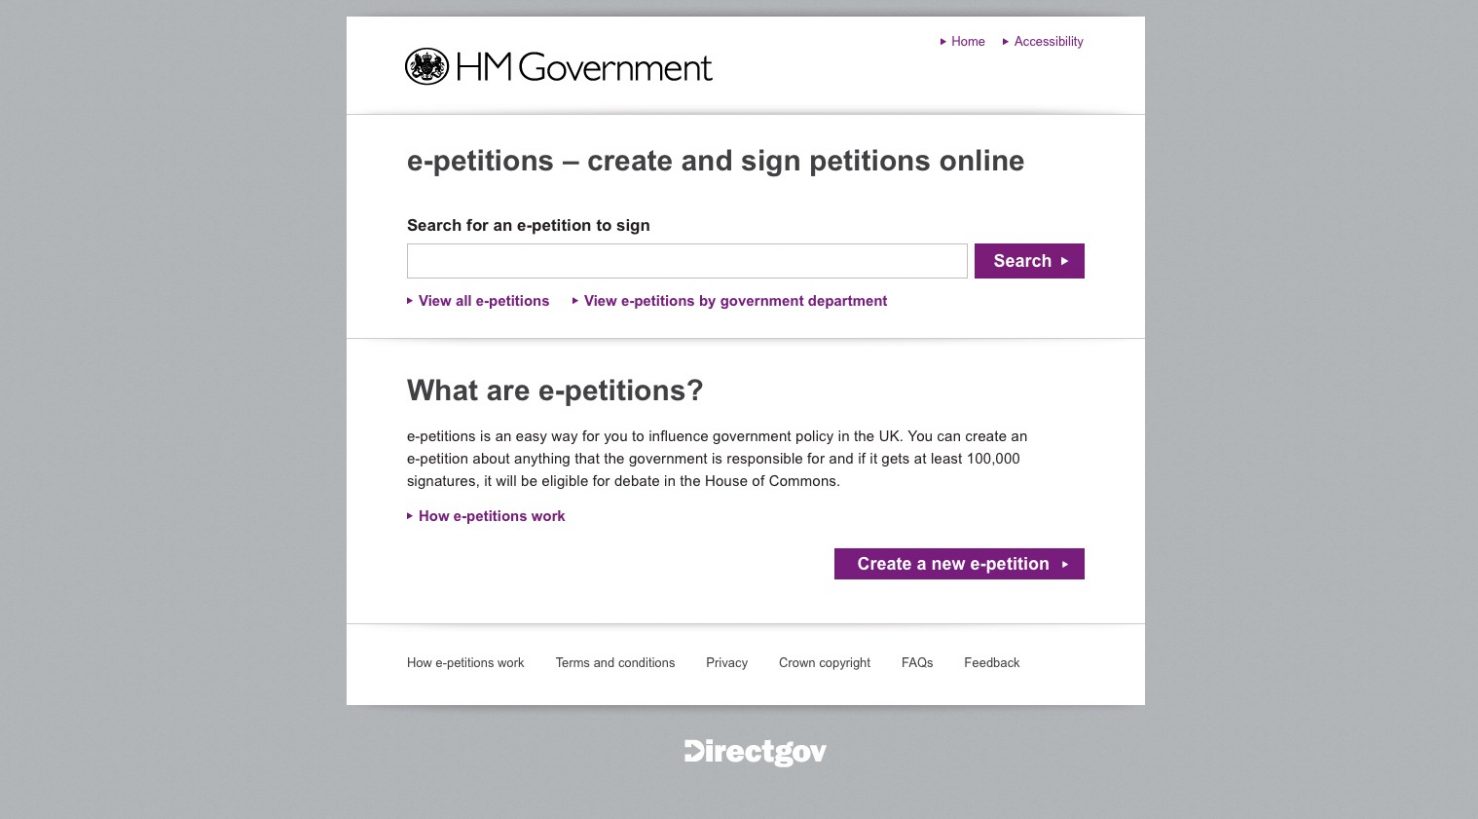 The original 2011 e-Petitions service home page.